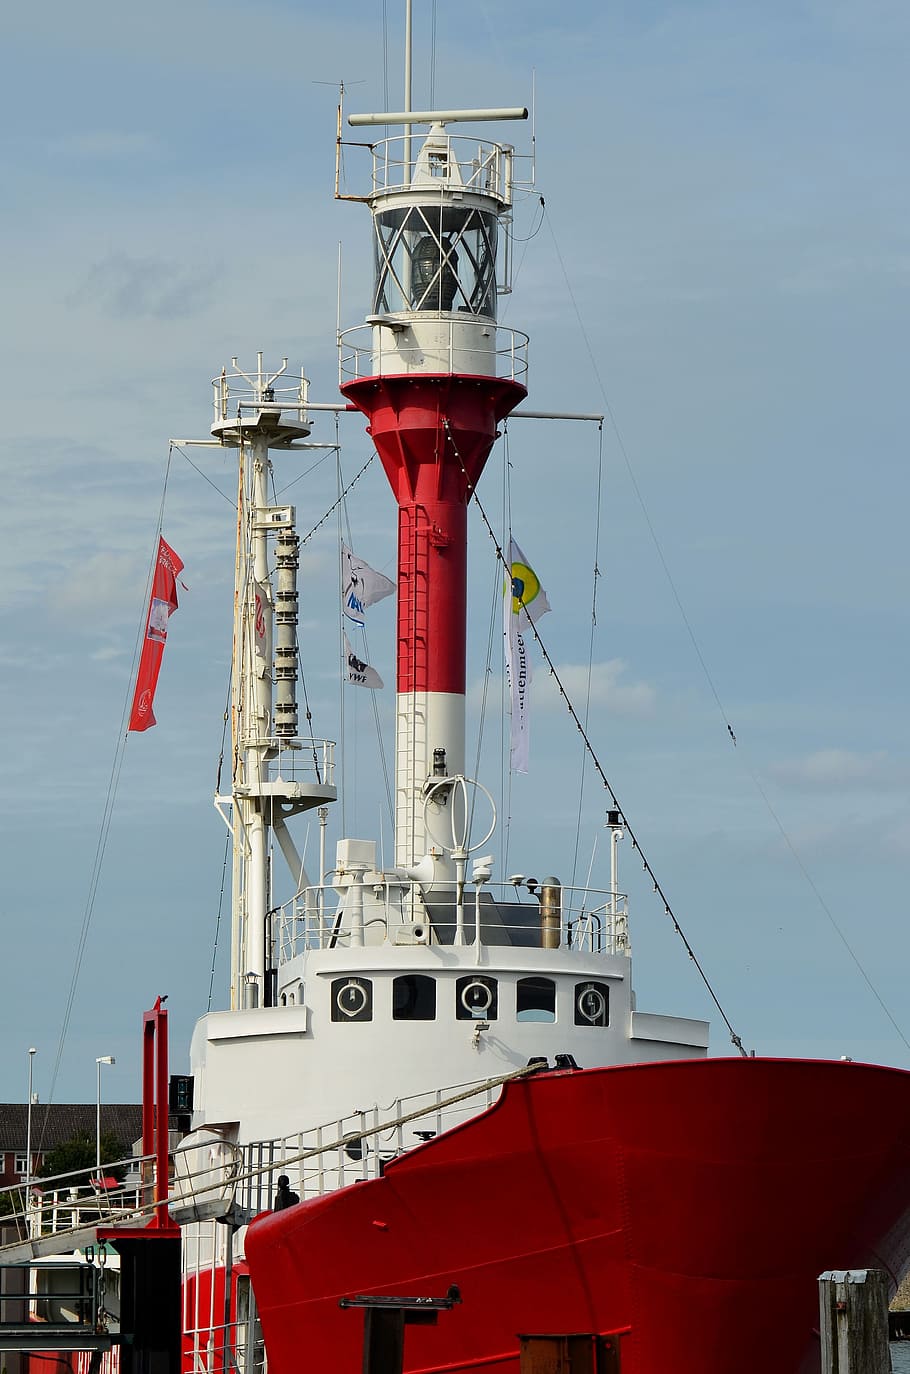 borkum, lightship, floating lighthouse, rescue ship, port, seafaring, north sea, coast, historically, ship